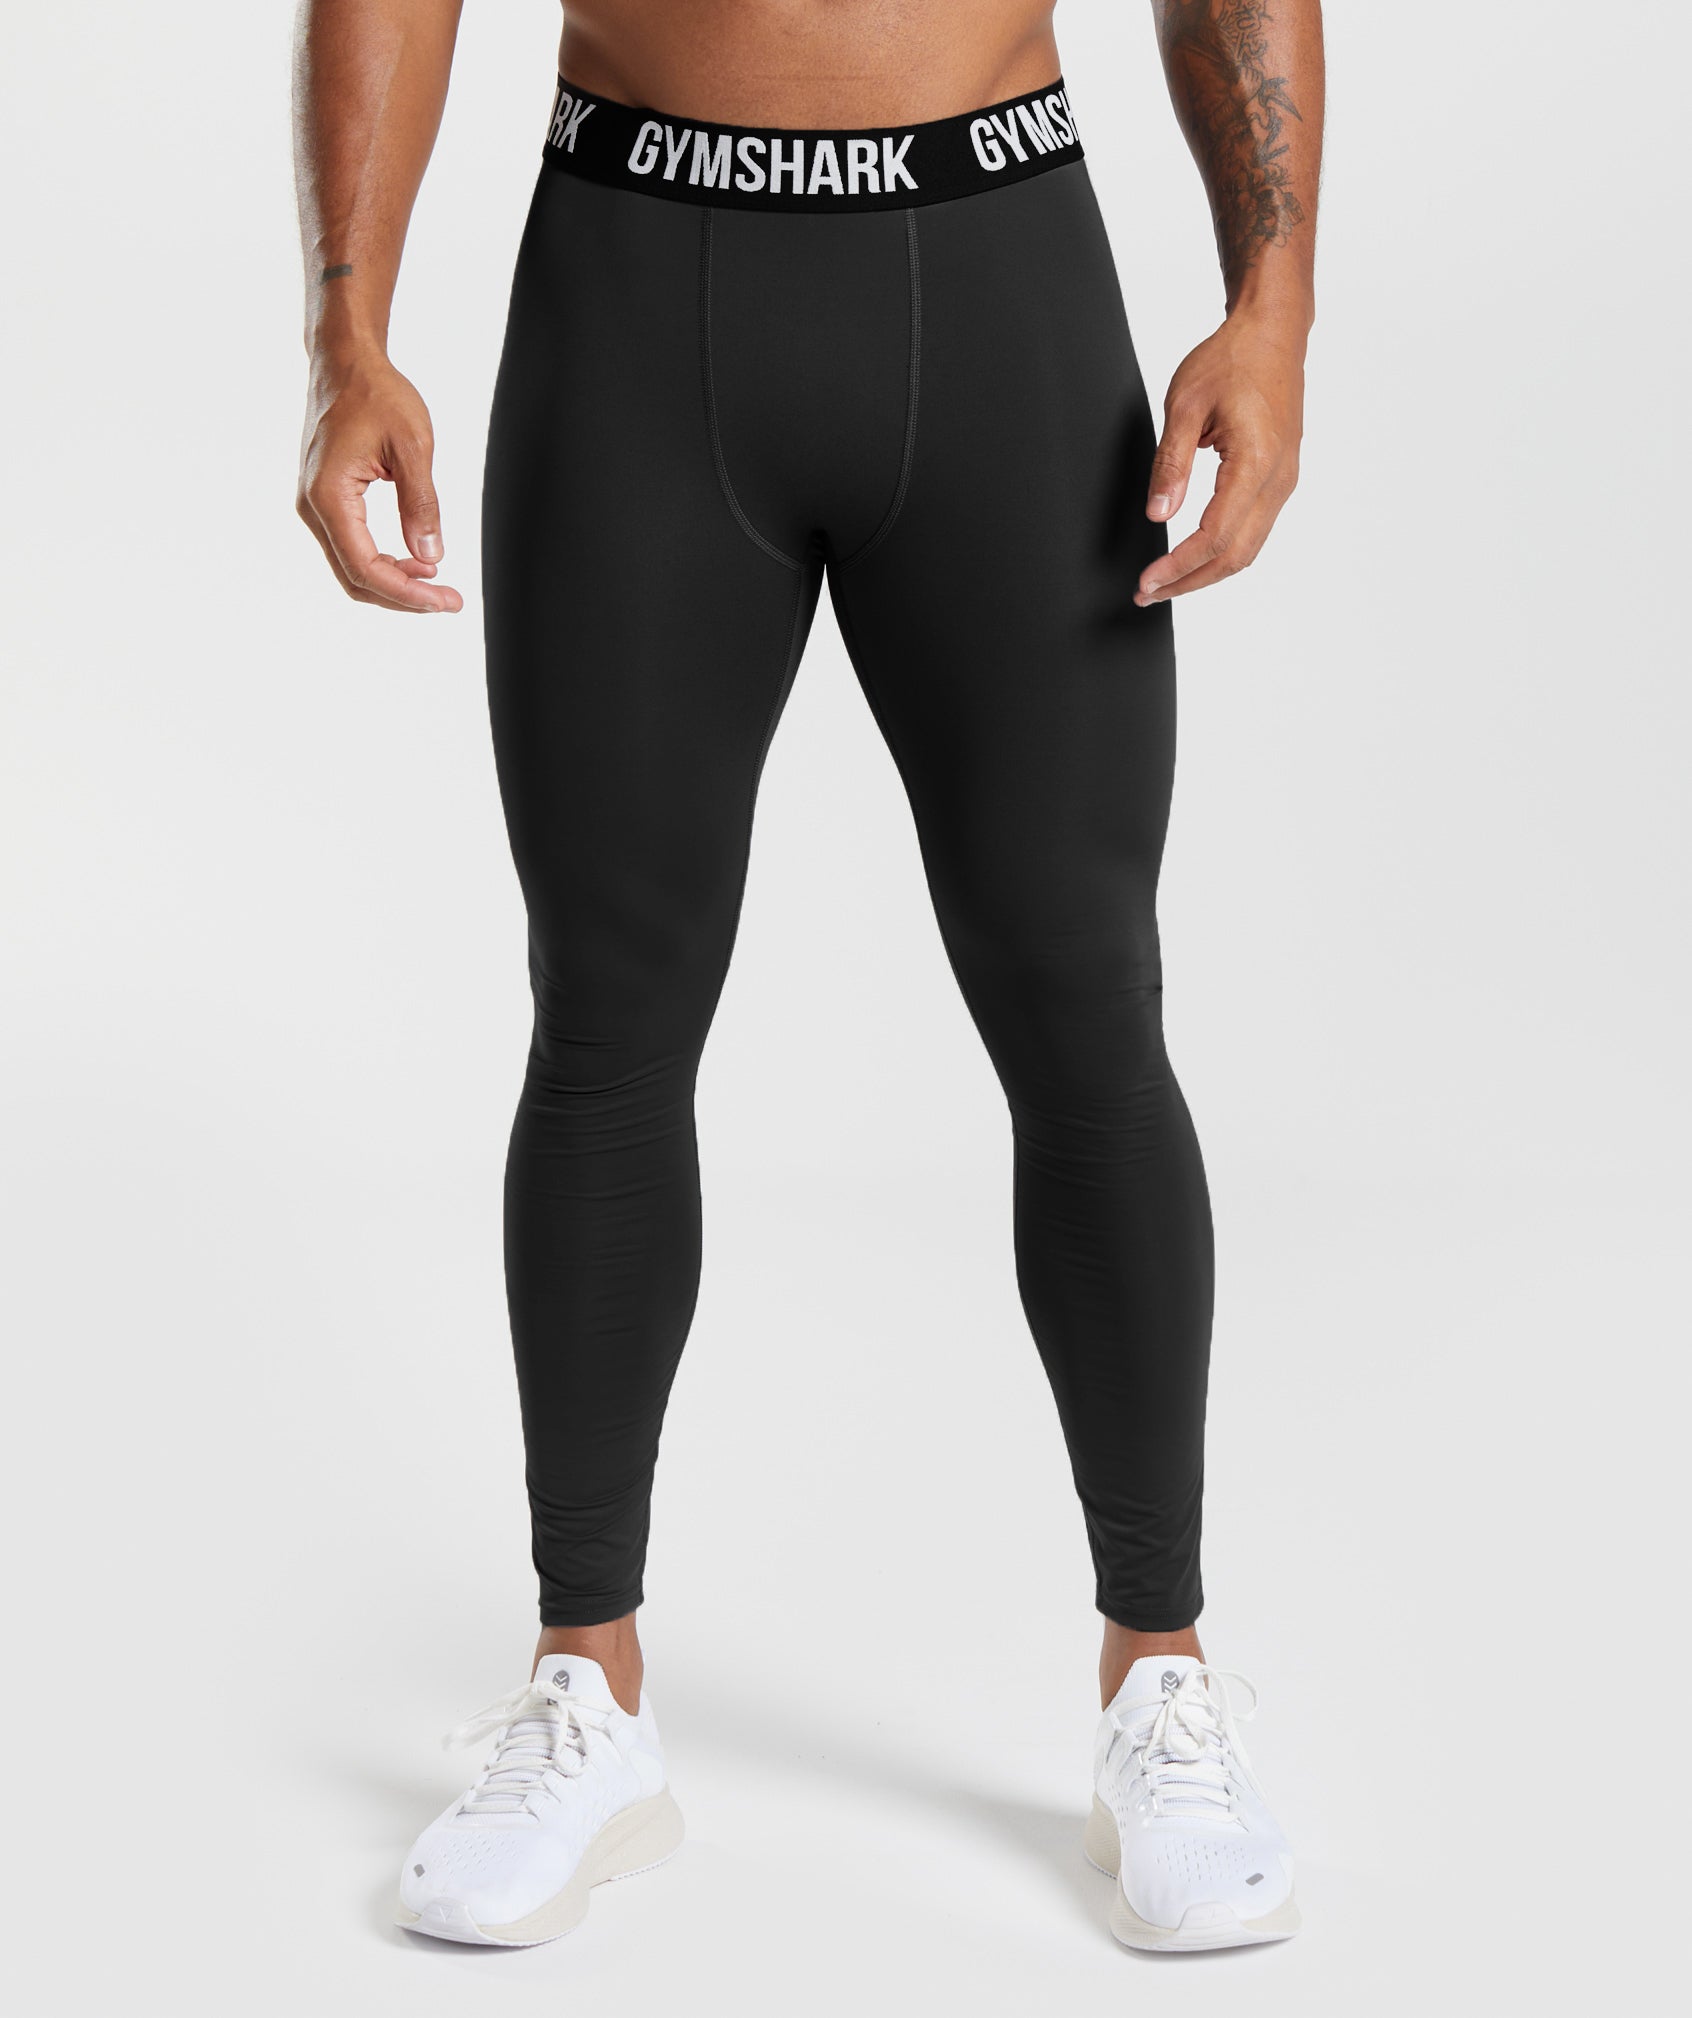 Gymshark Business Active Pants for Men